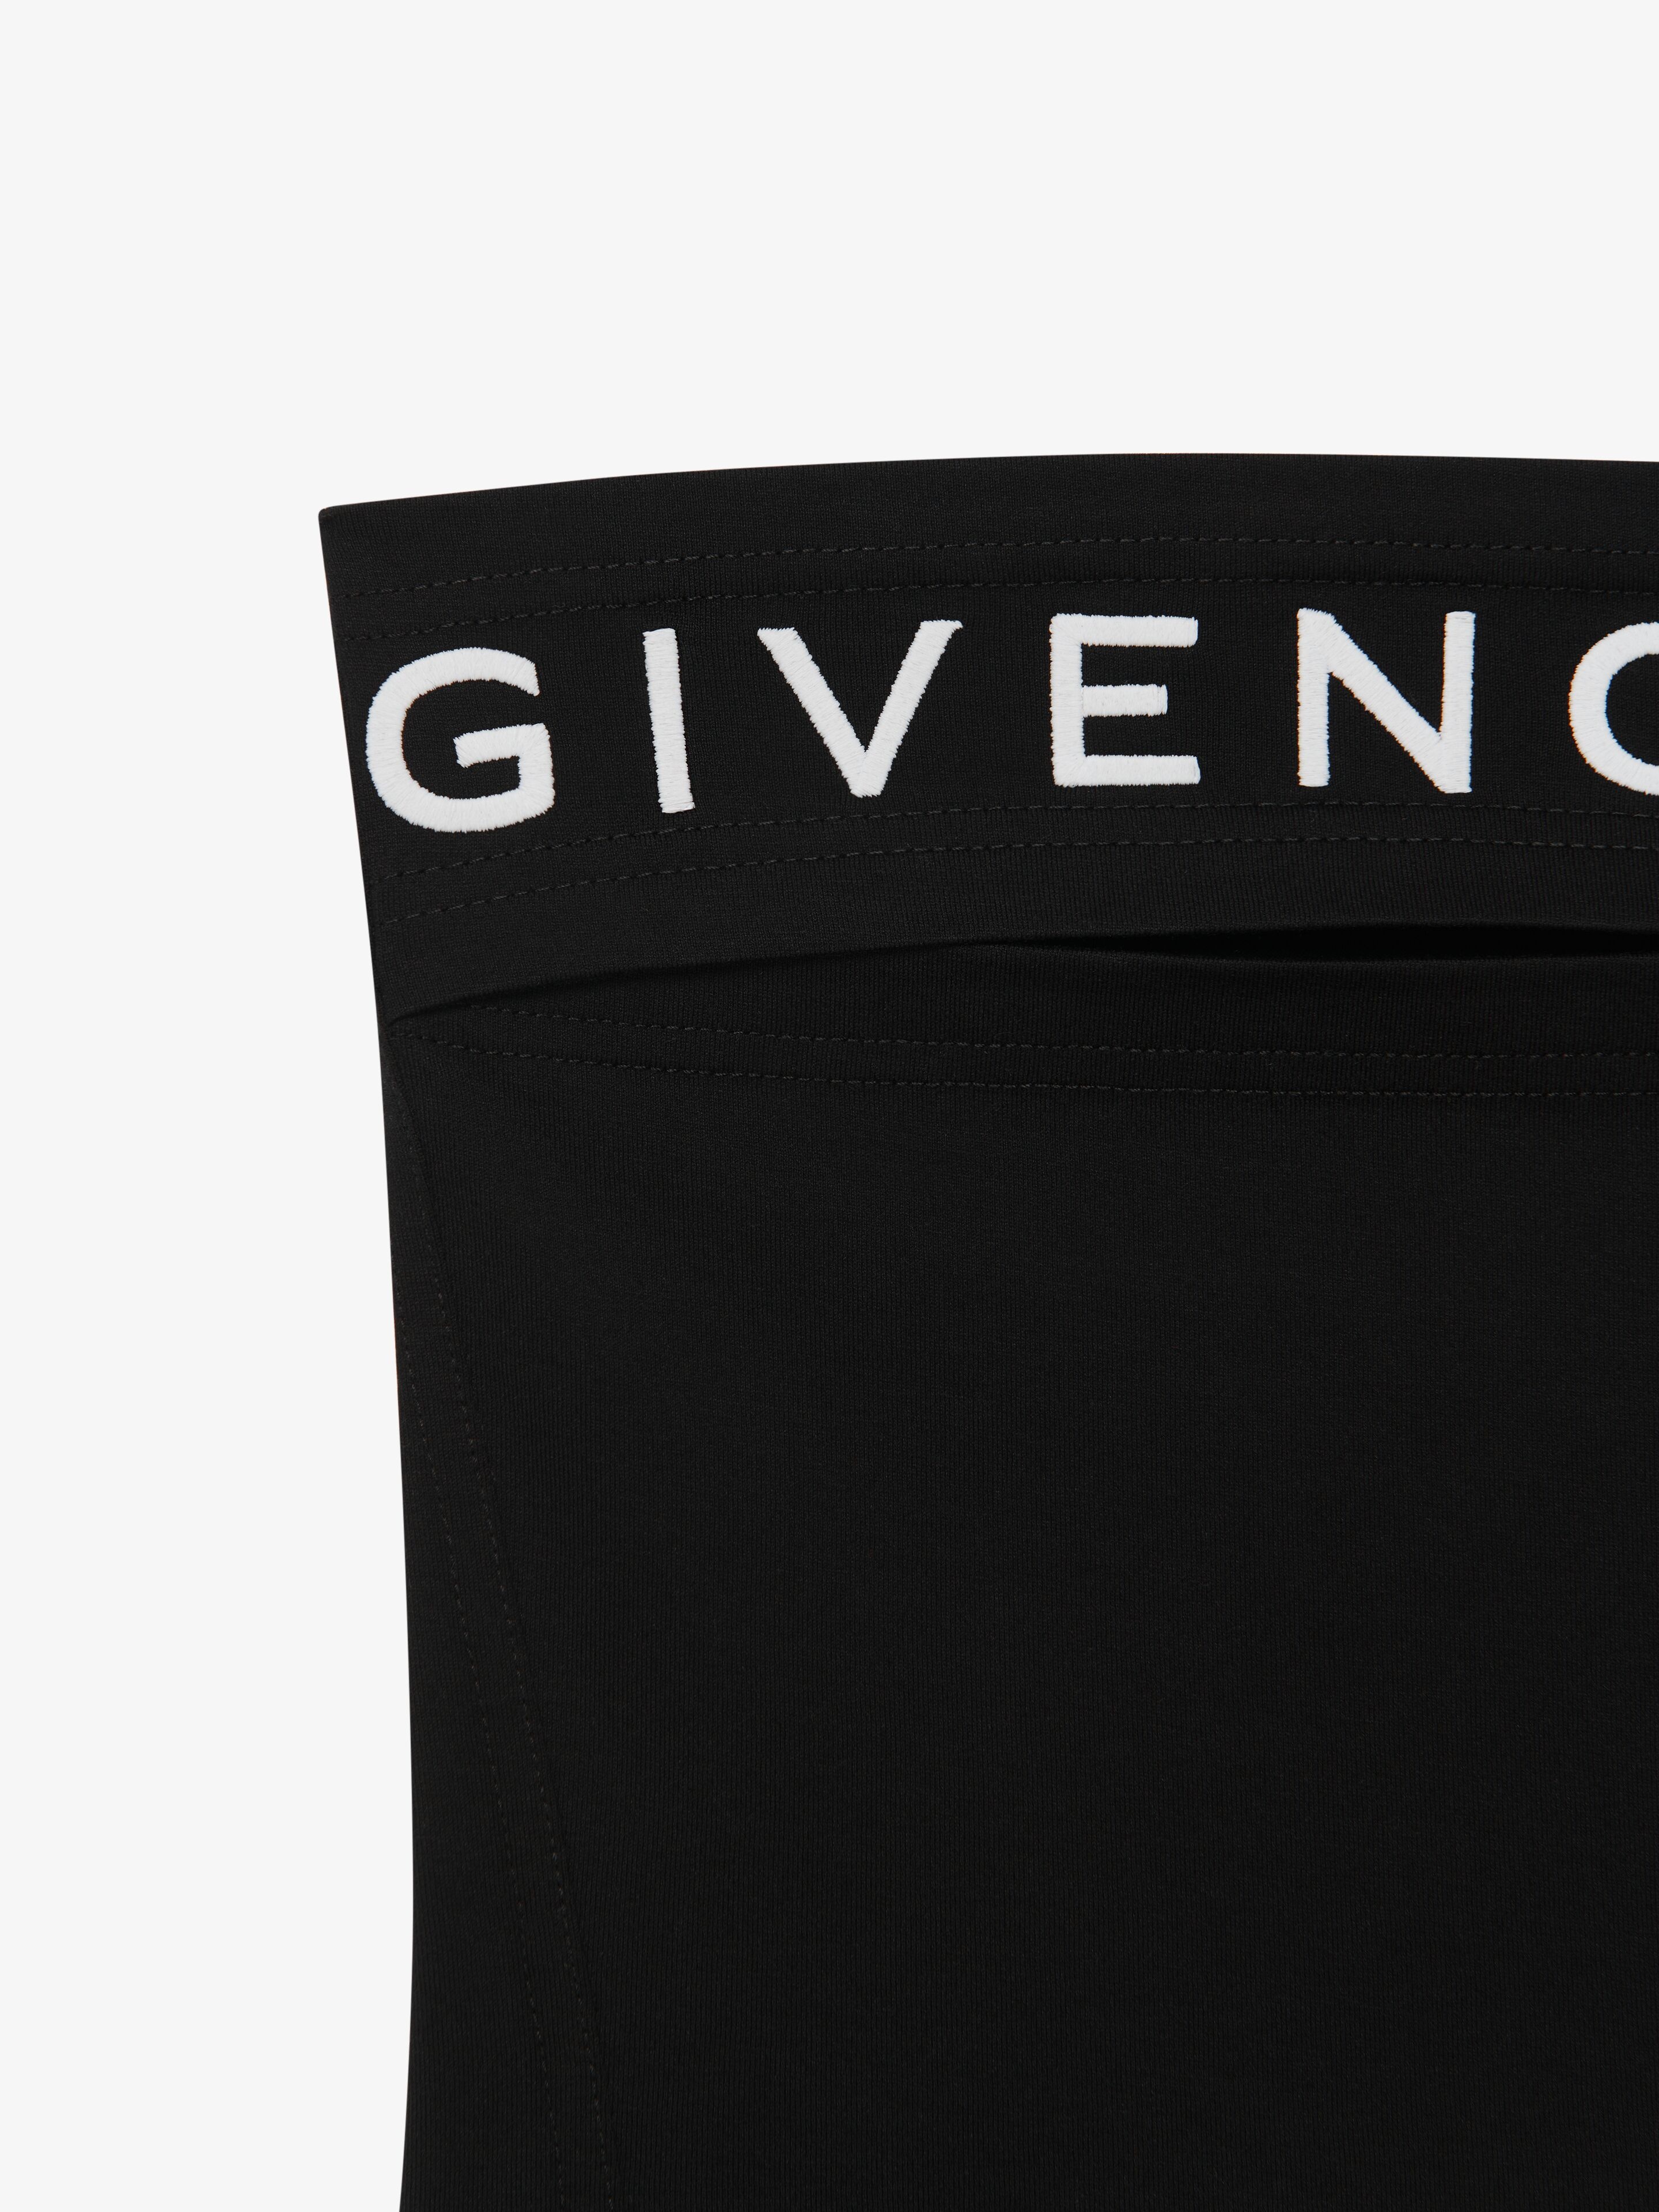 Givenchy Black Embroidered Balaclava